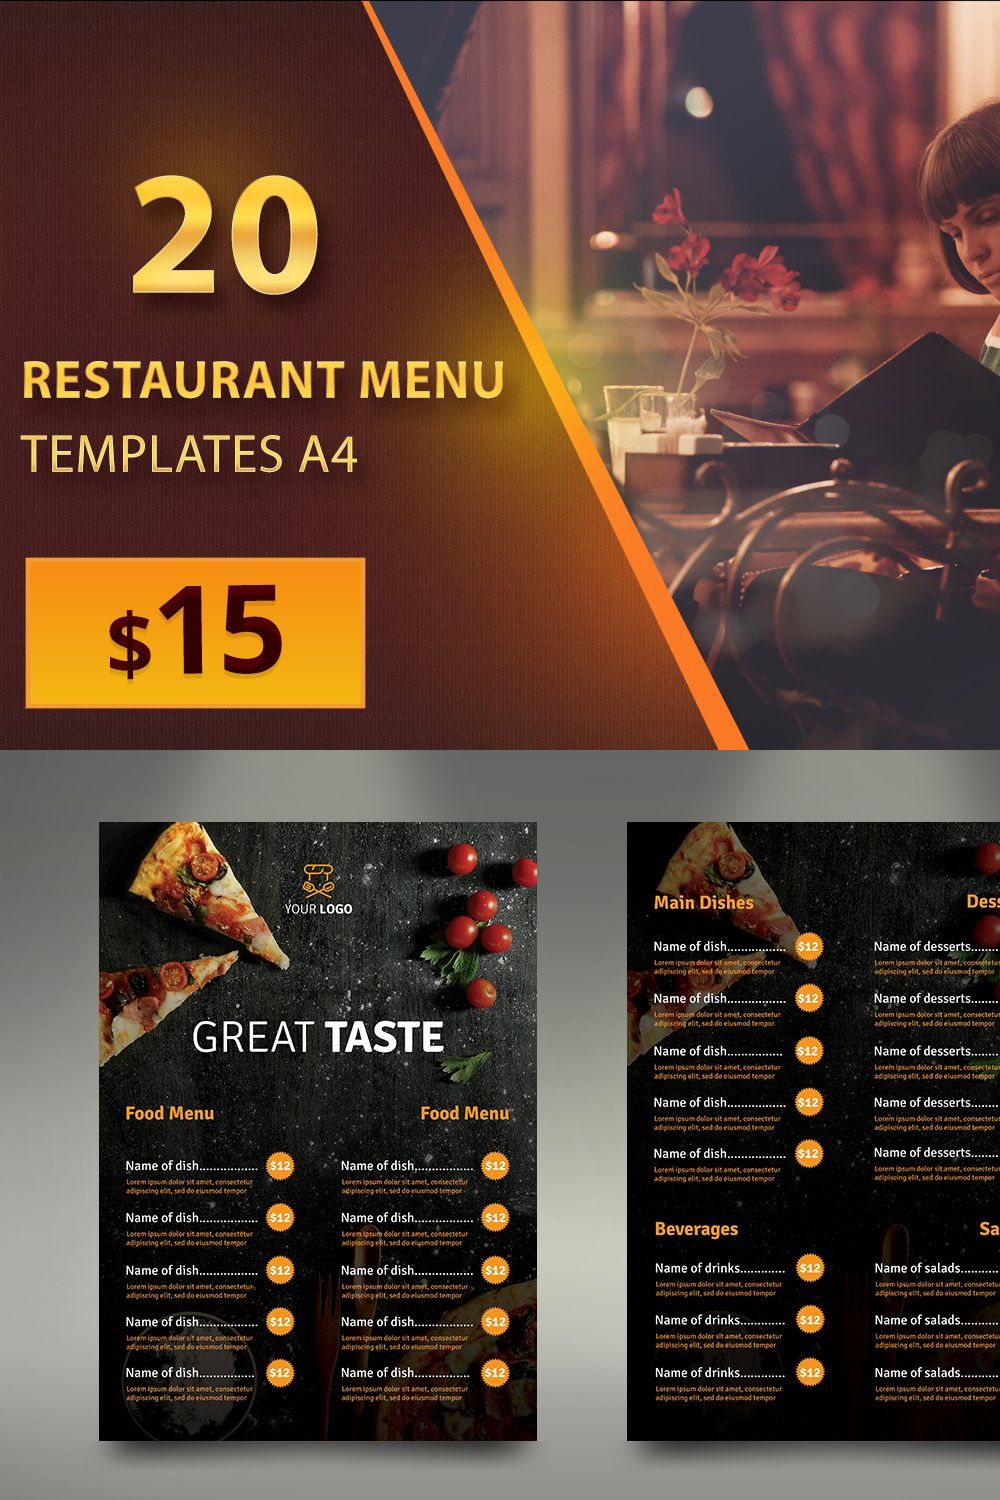 20 Restaurant Menu Templates A4 pinterest preview image.